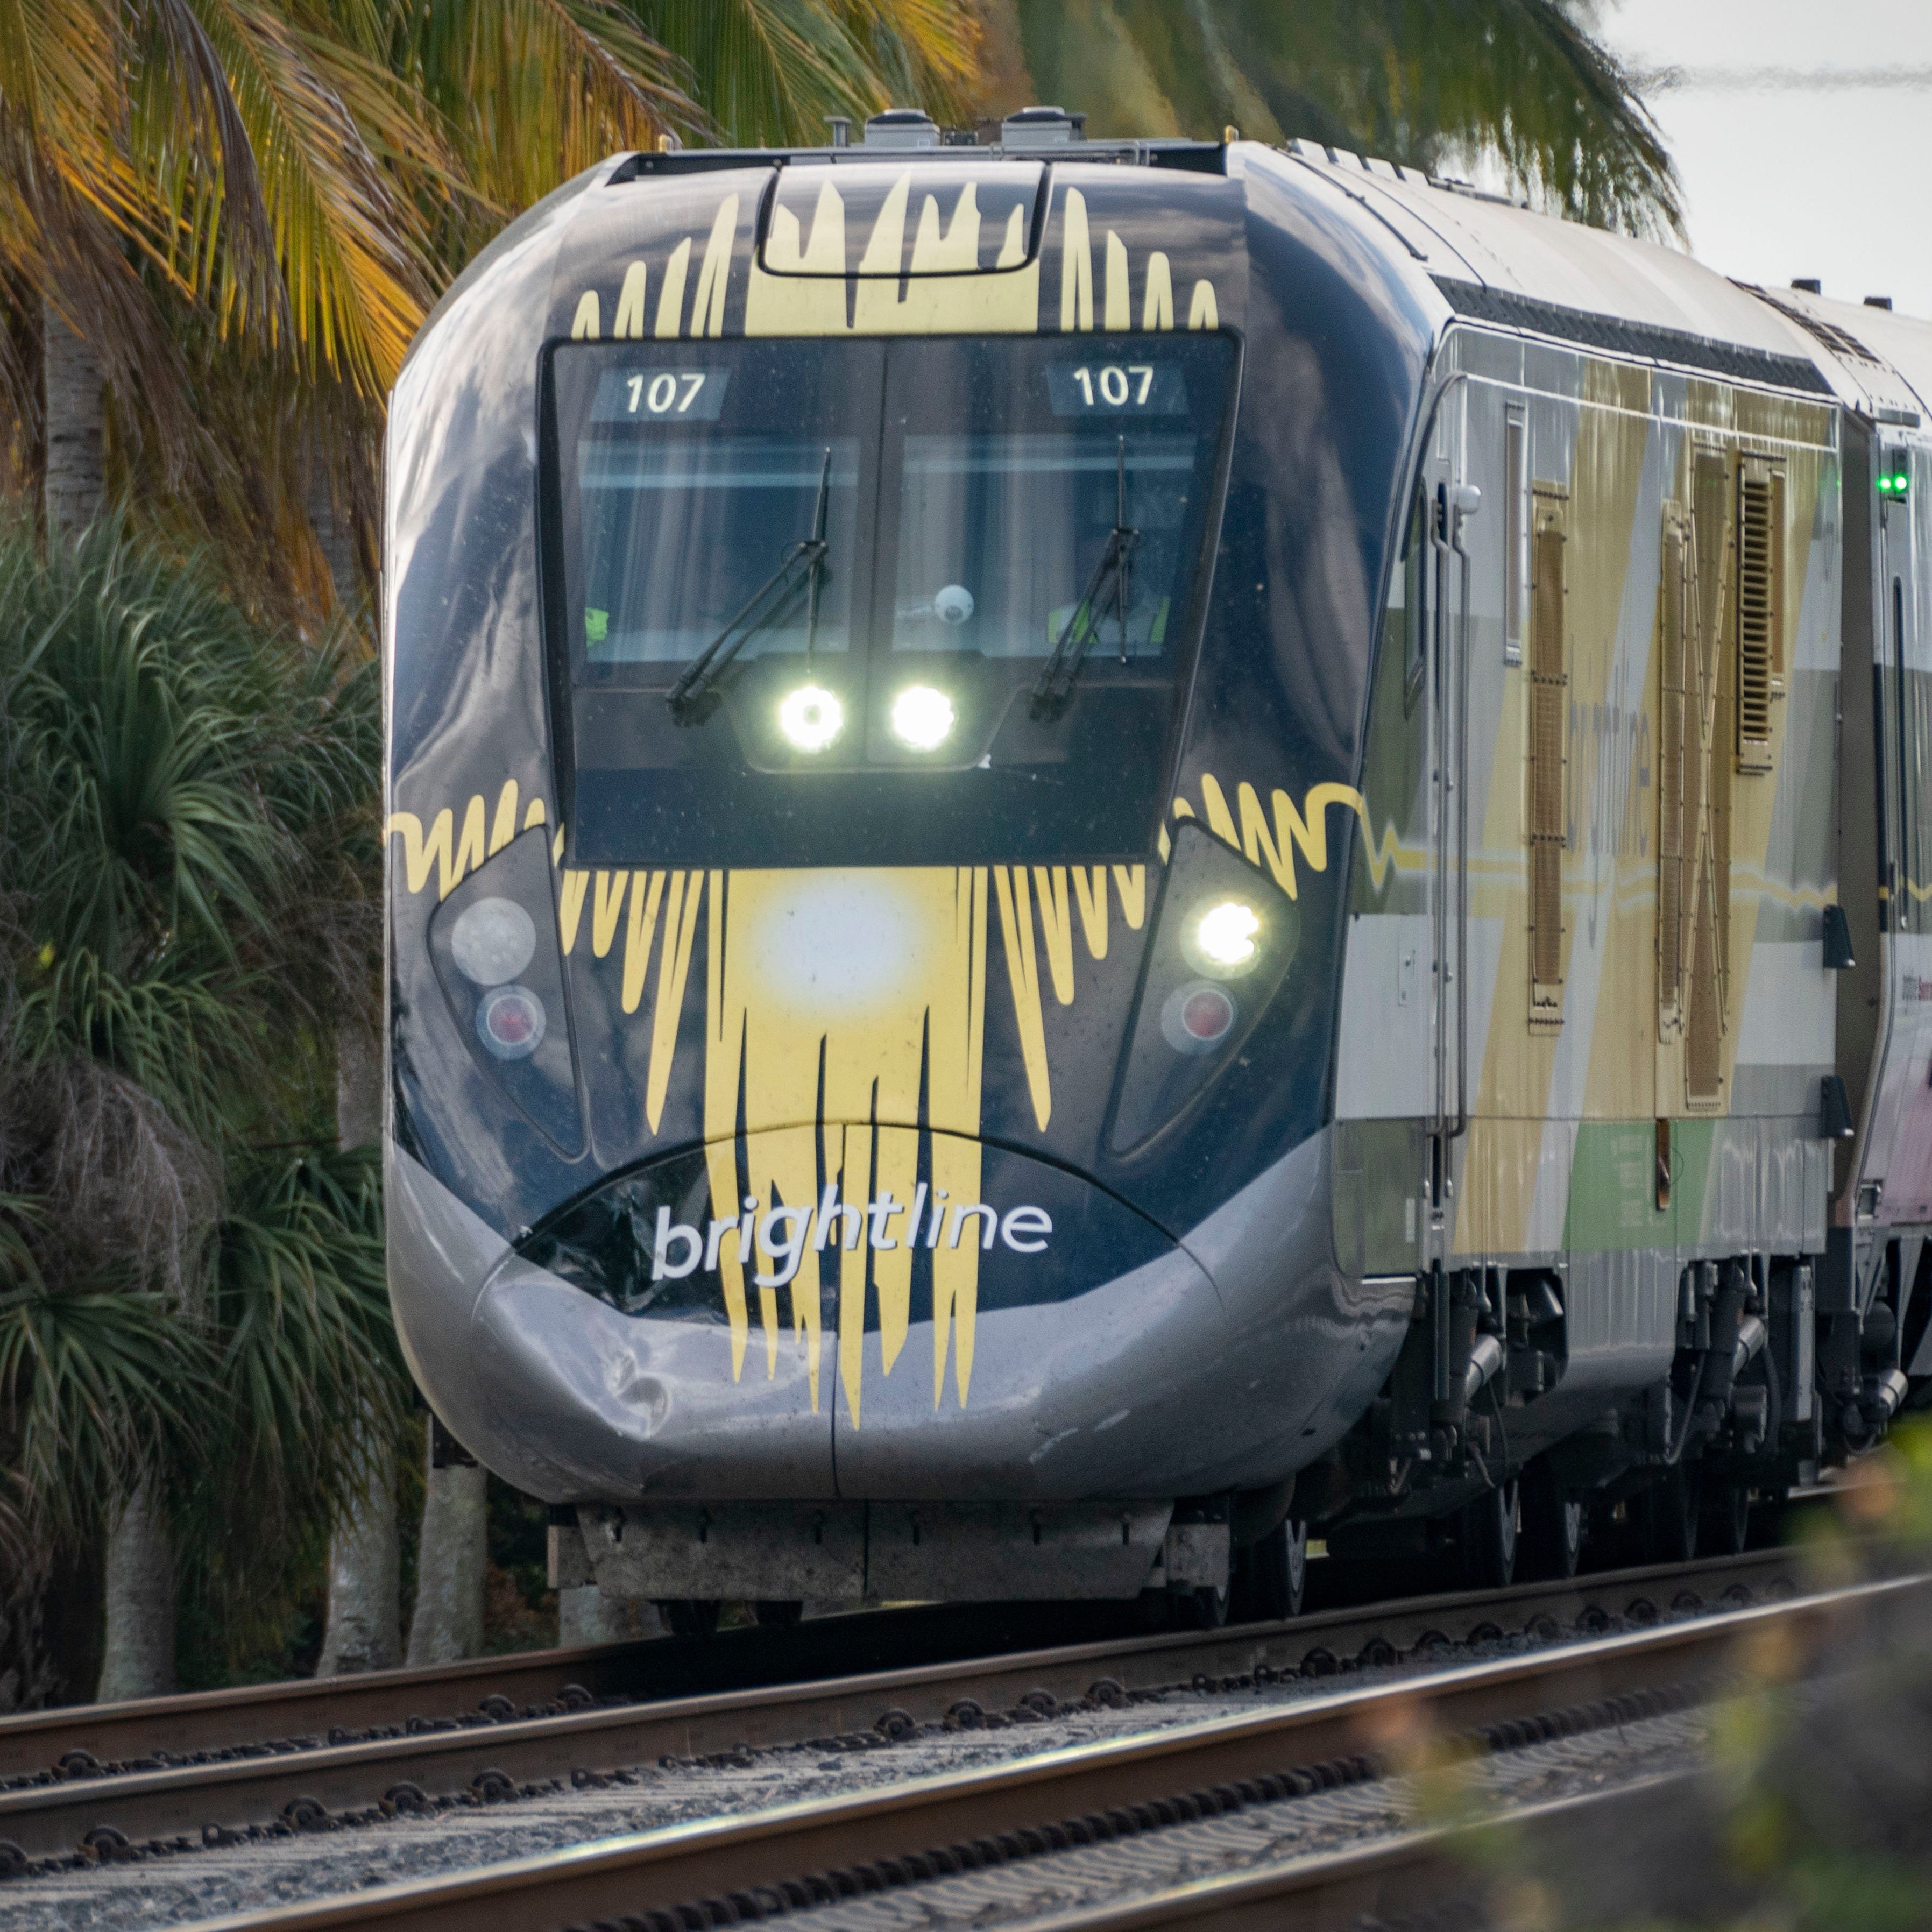 Brightline is testing trains to travel over 100 mph. A northbound Brightline train near Northeast 13th Avenue in Boynton Beach, Florida on January 4, 2021.